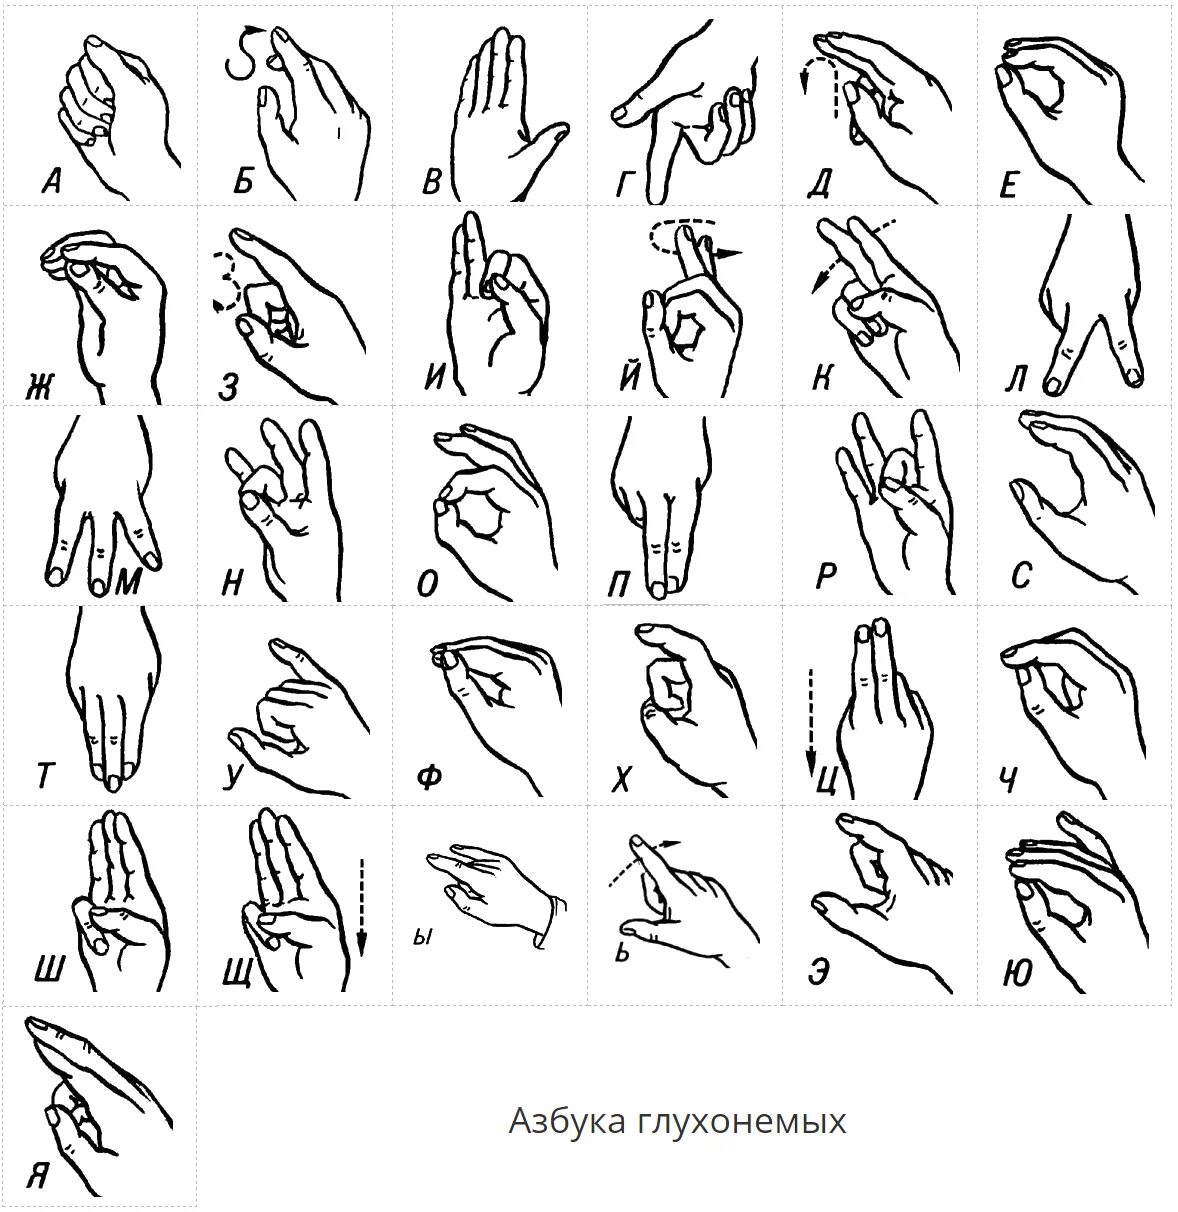 Язык жестов глухонемых алфавит. Алфавит жестов для глухонемых. Дактиль Азбука жестов. Азбука для глухонемых дактильная. Буквы глухонемых